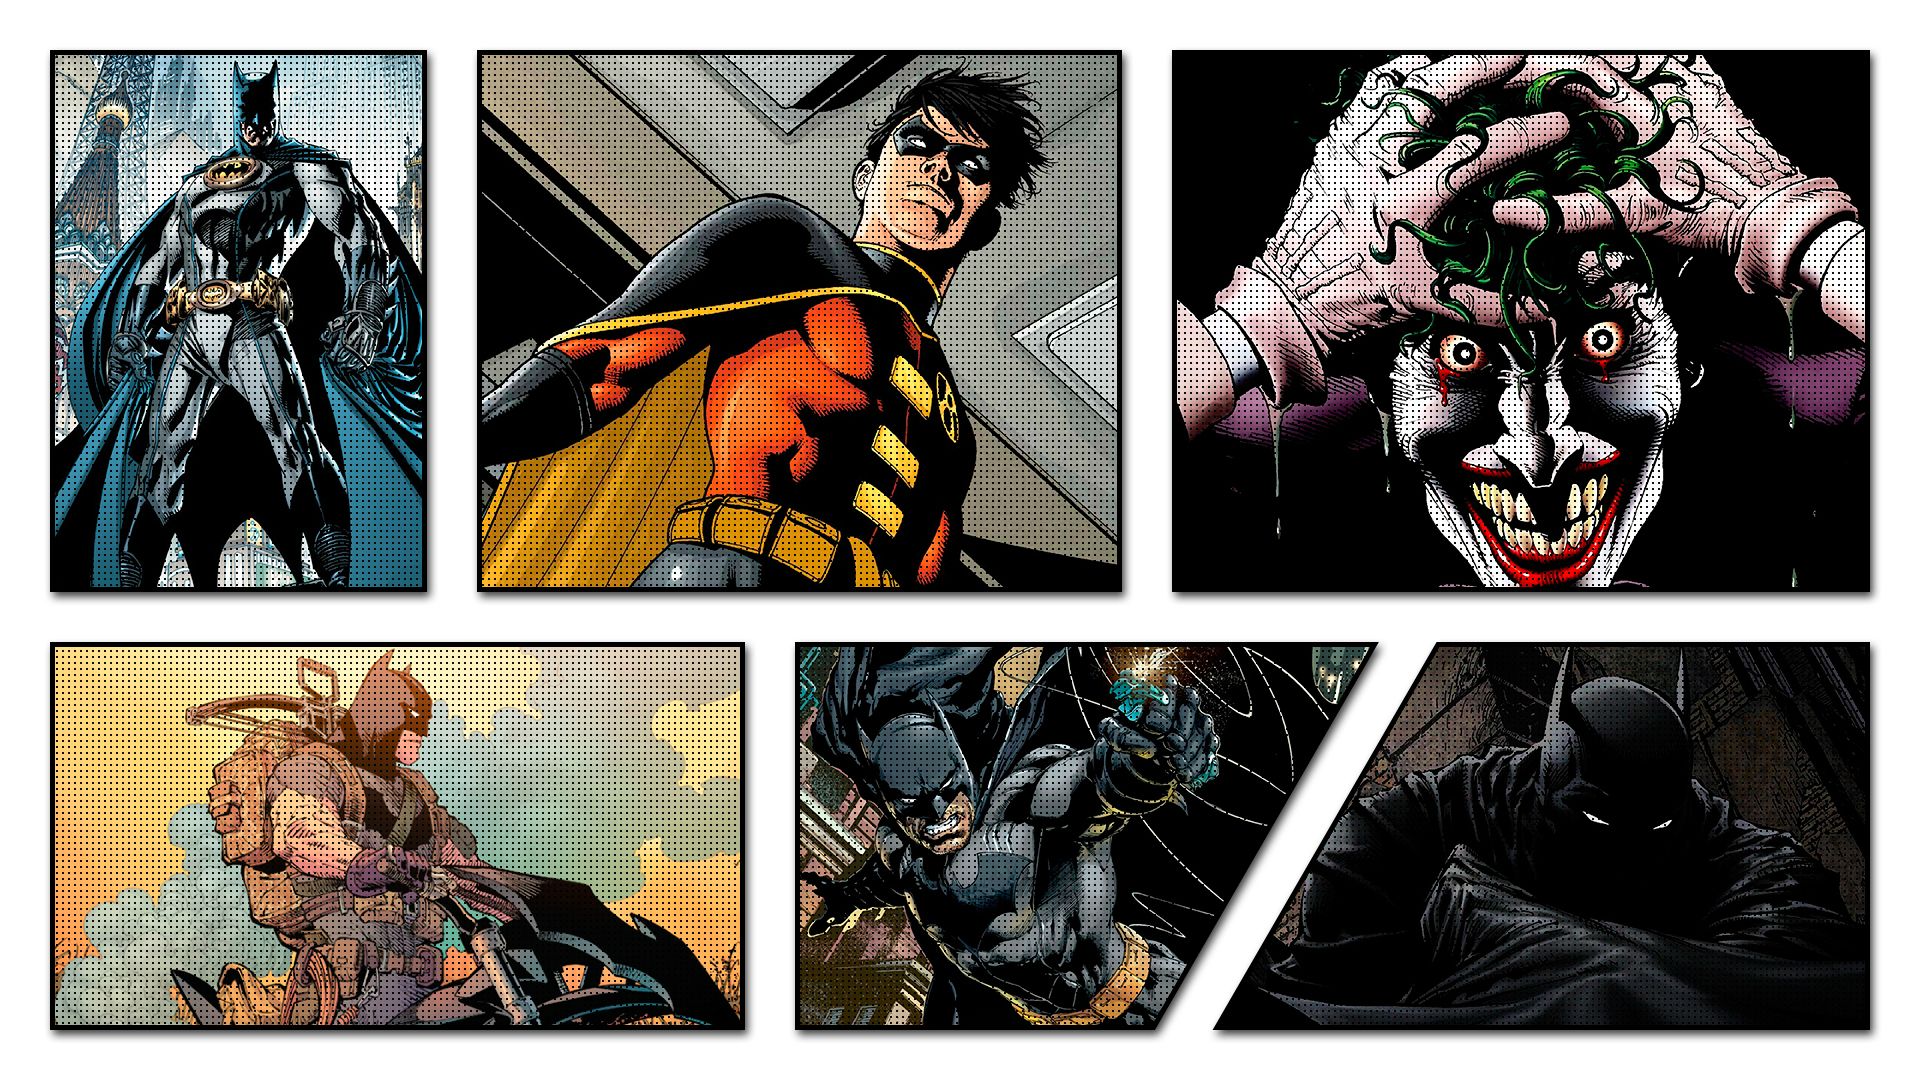 Скачать обои бесплатно Джокер, Комиксы, Бэтмен, Комиксы Dc, Робин (Комиксы Dc), Тим Дрейк, Бэтмен И Робин картинка на рабочий стол ПК